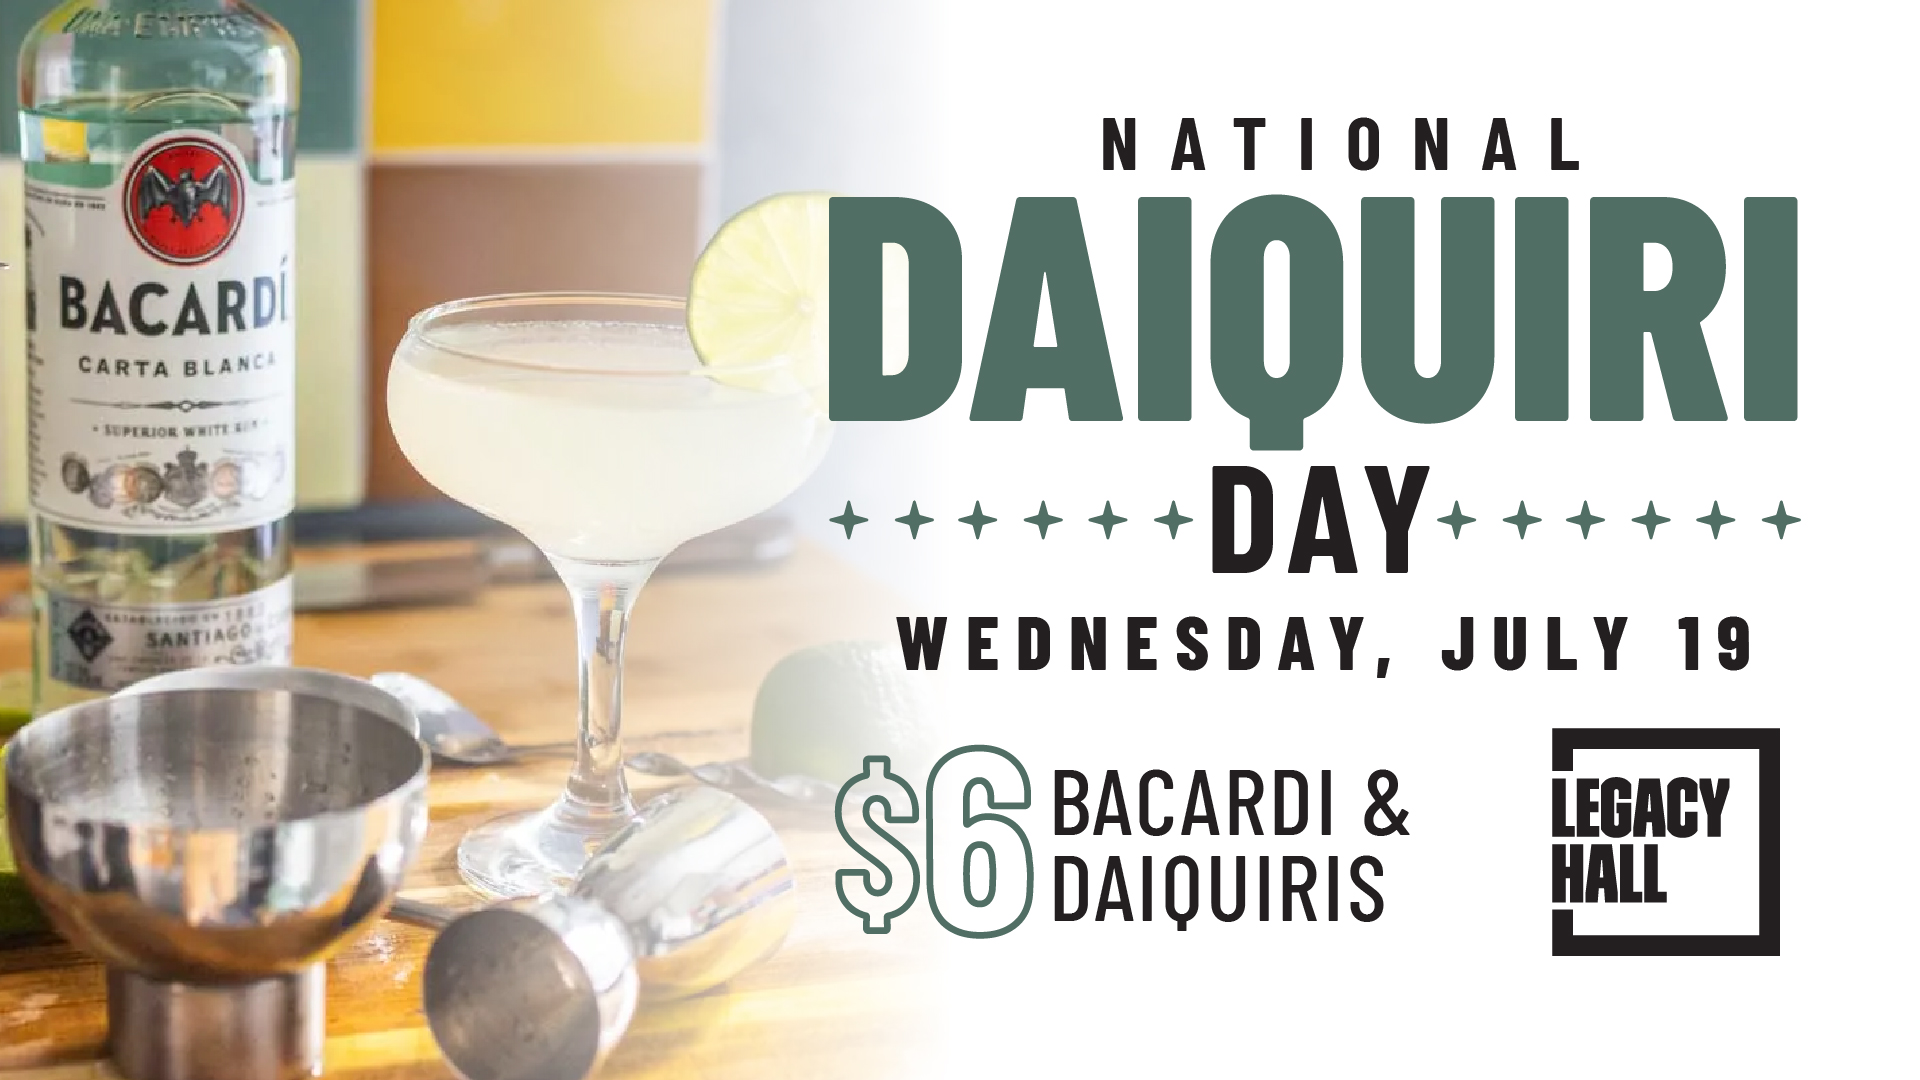 Promo image of National Daiquiri Day